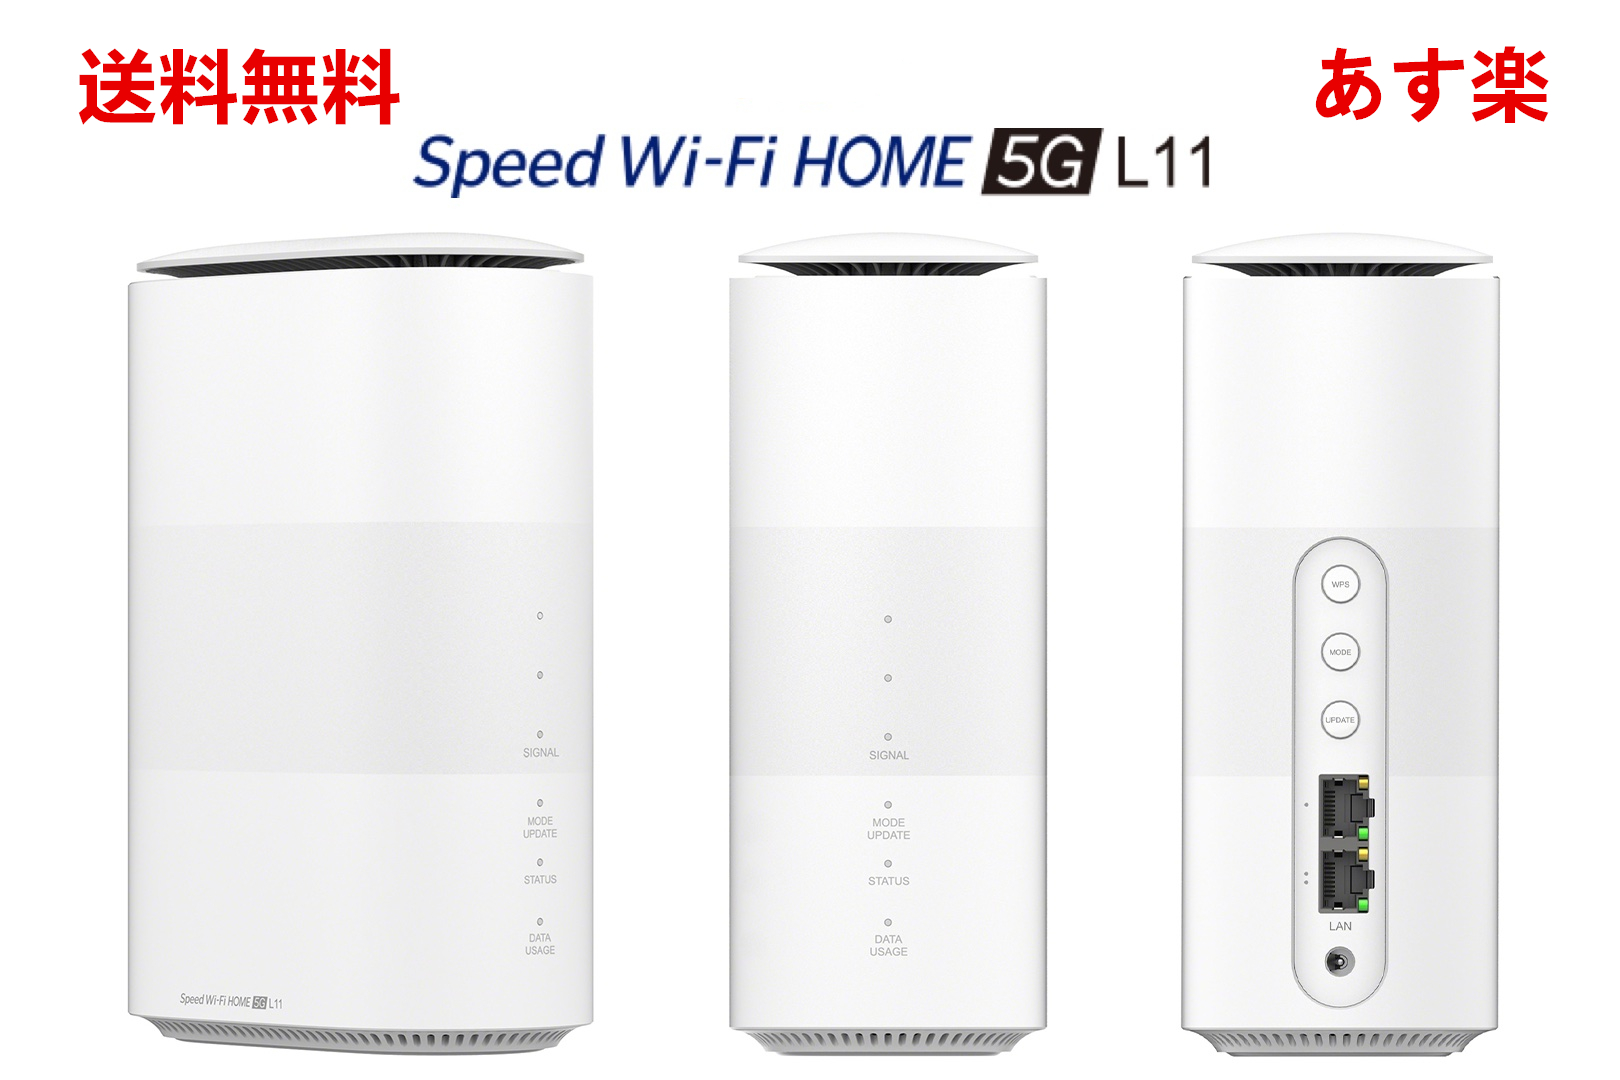 au UQ WiMAX Speed Wi-Fi HOME 5G L11